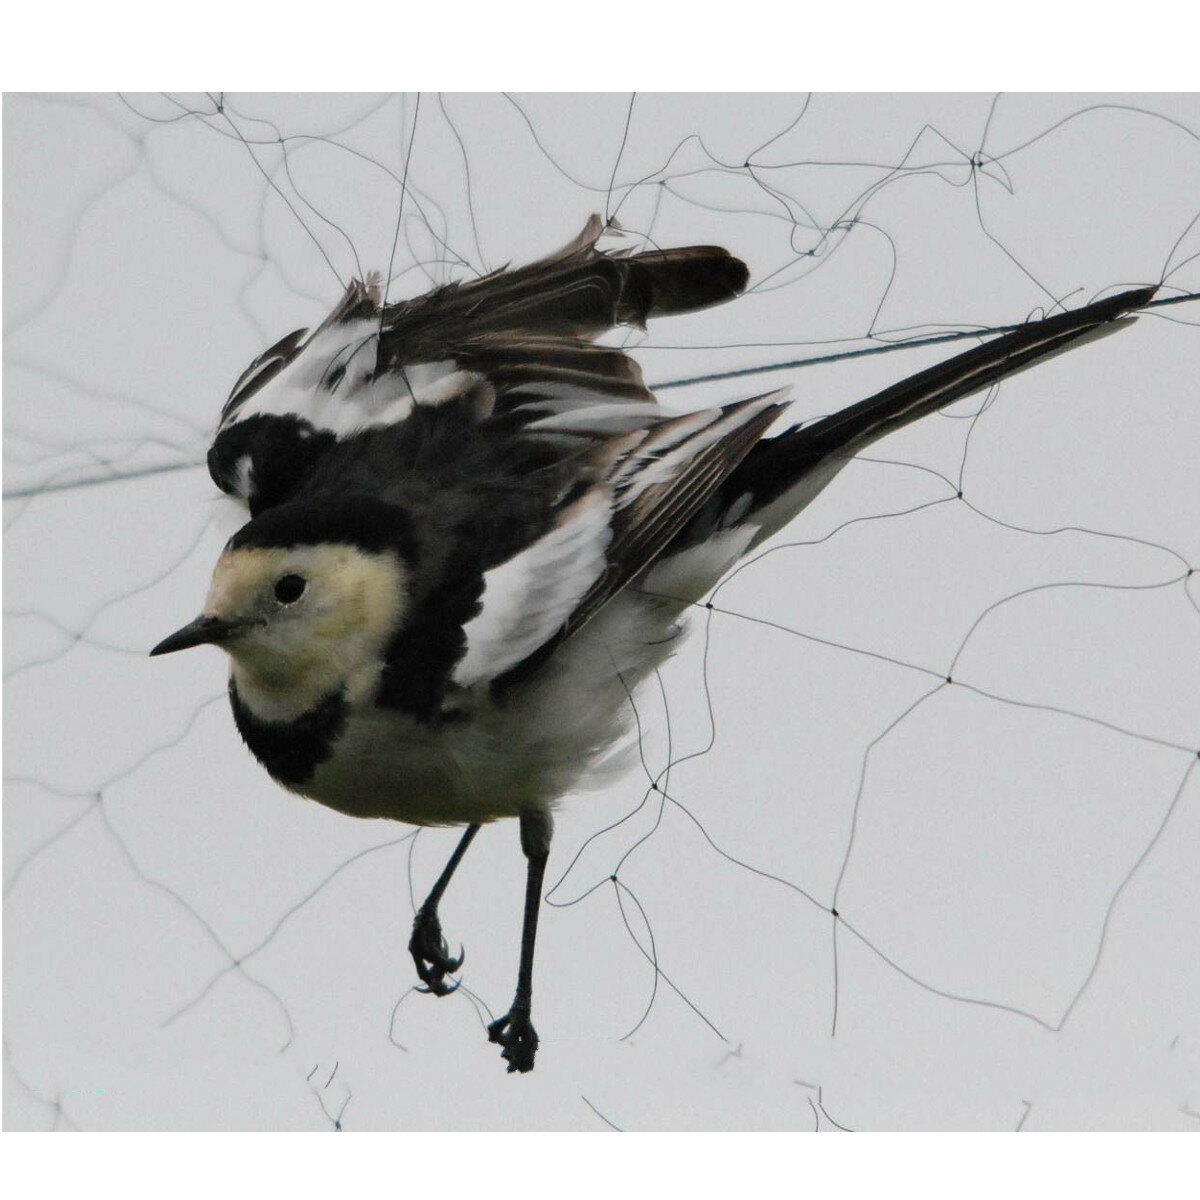 15x5m Mesh Anti Bird Mist Net 20mm Hole Orchard Protect Prevent Sparrow Damage 